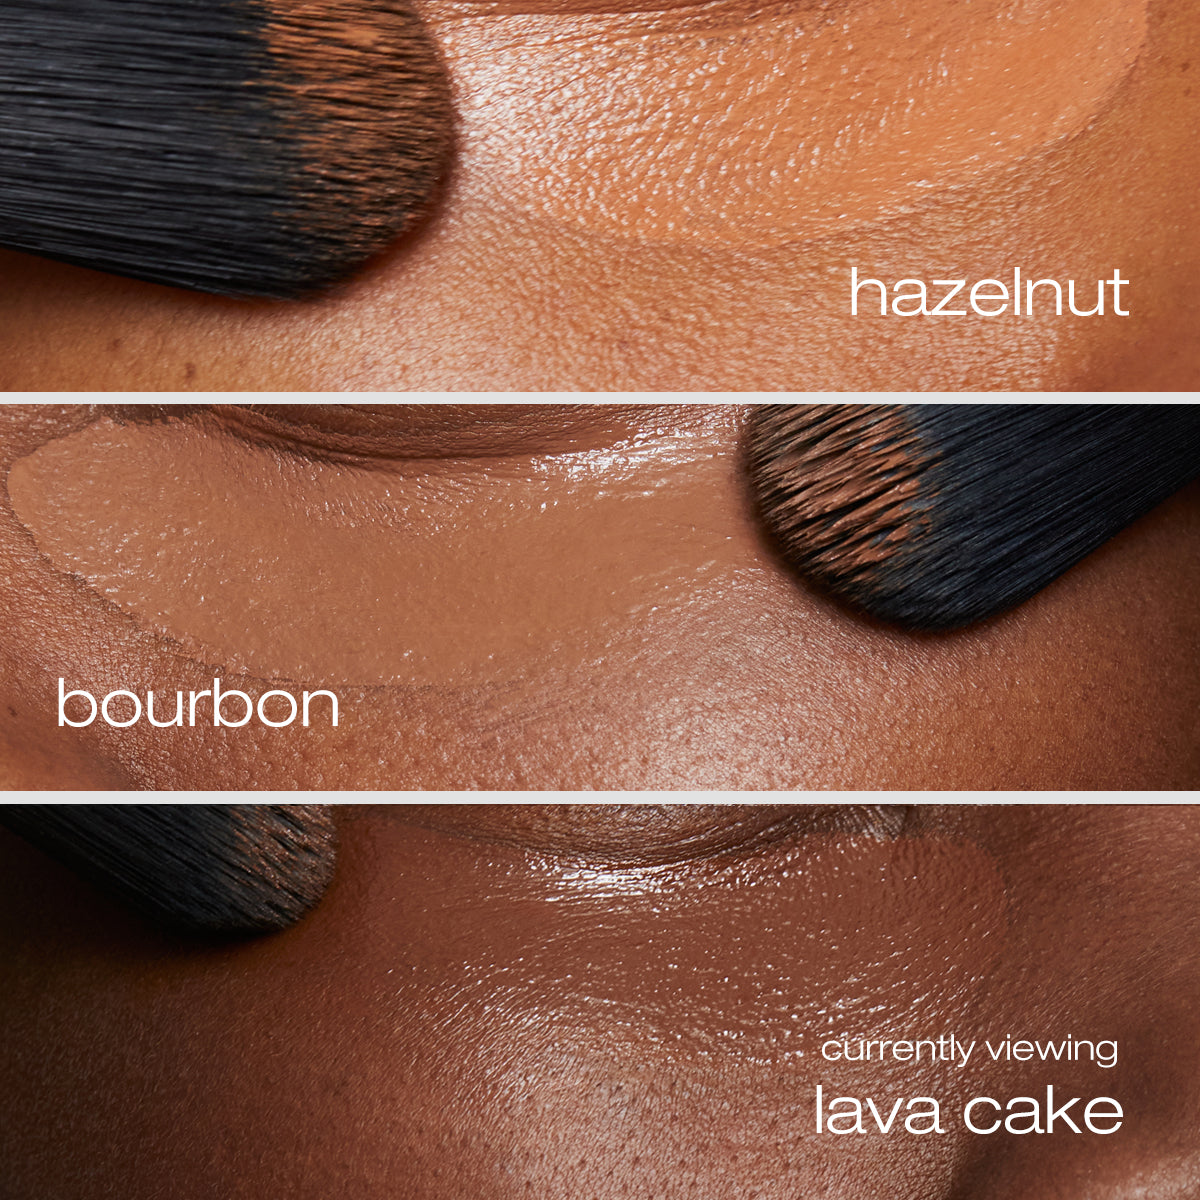 Hazelnut, bourbon, and lava cake applied to undereyes